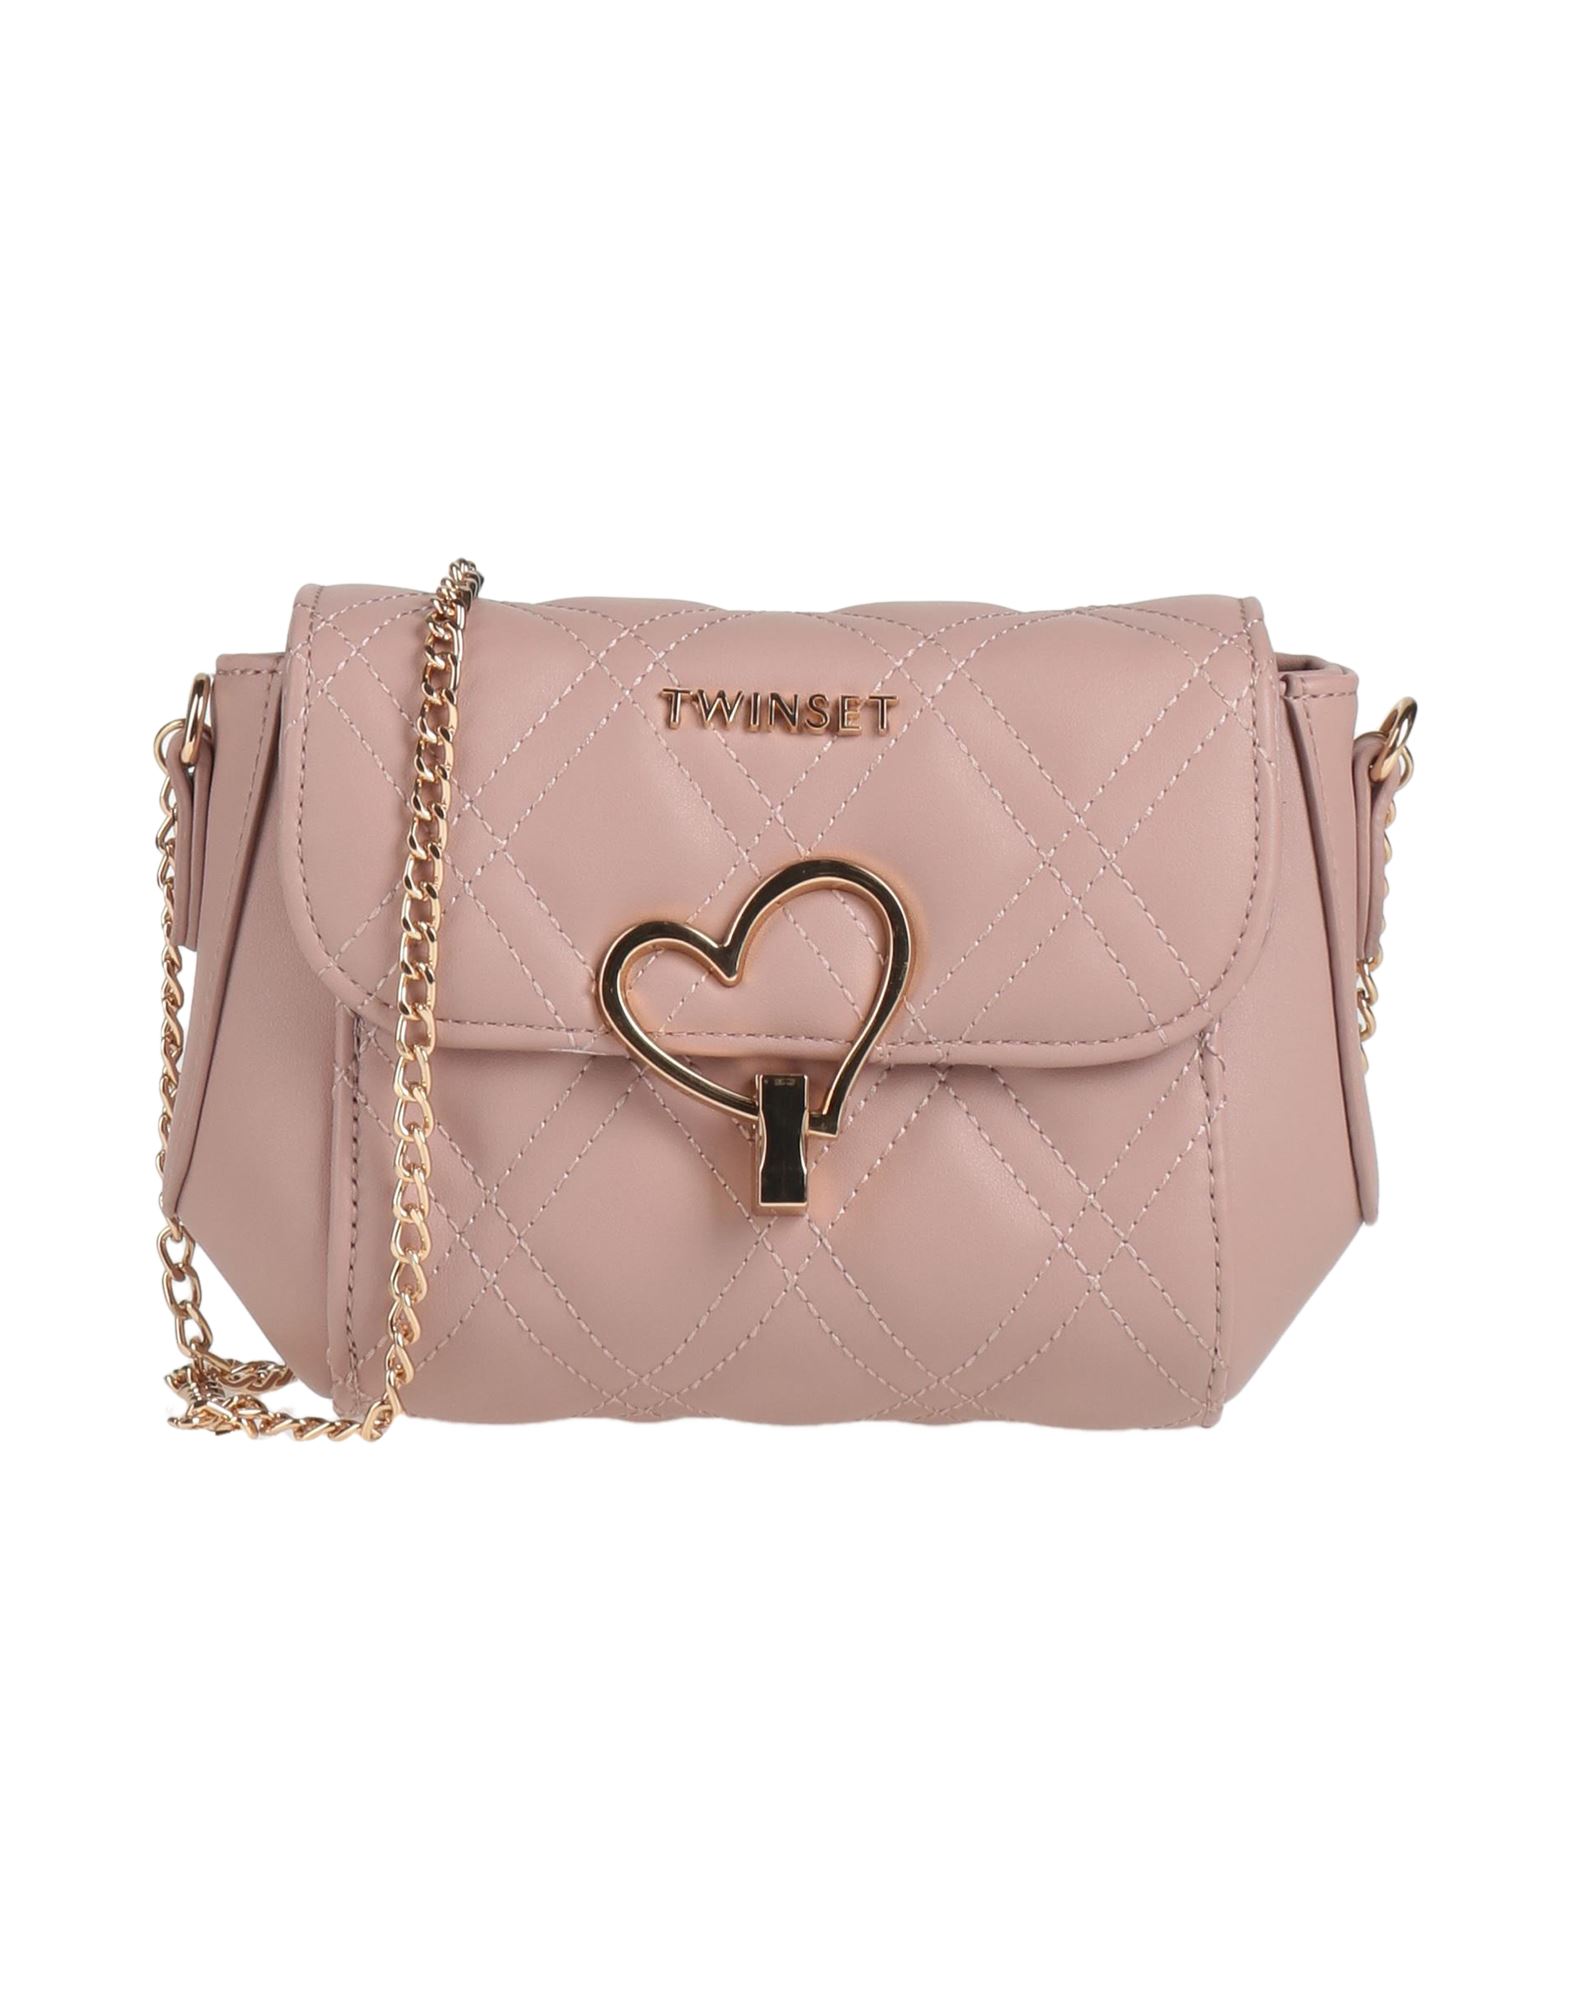 Twinset Handbags In Pastel Pink